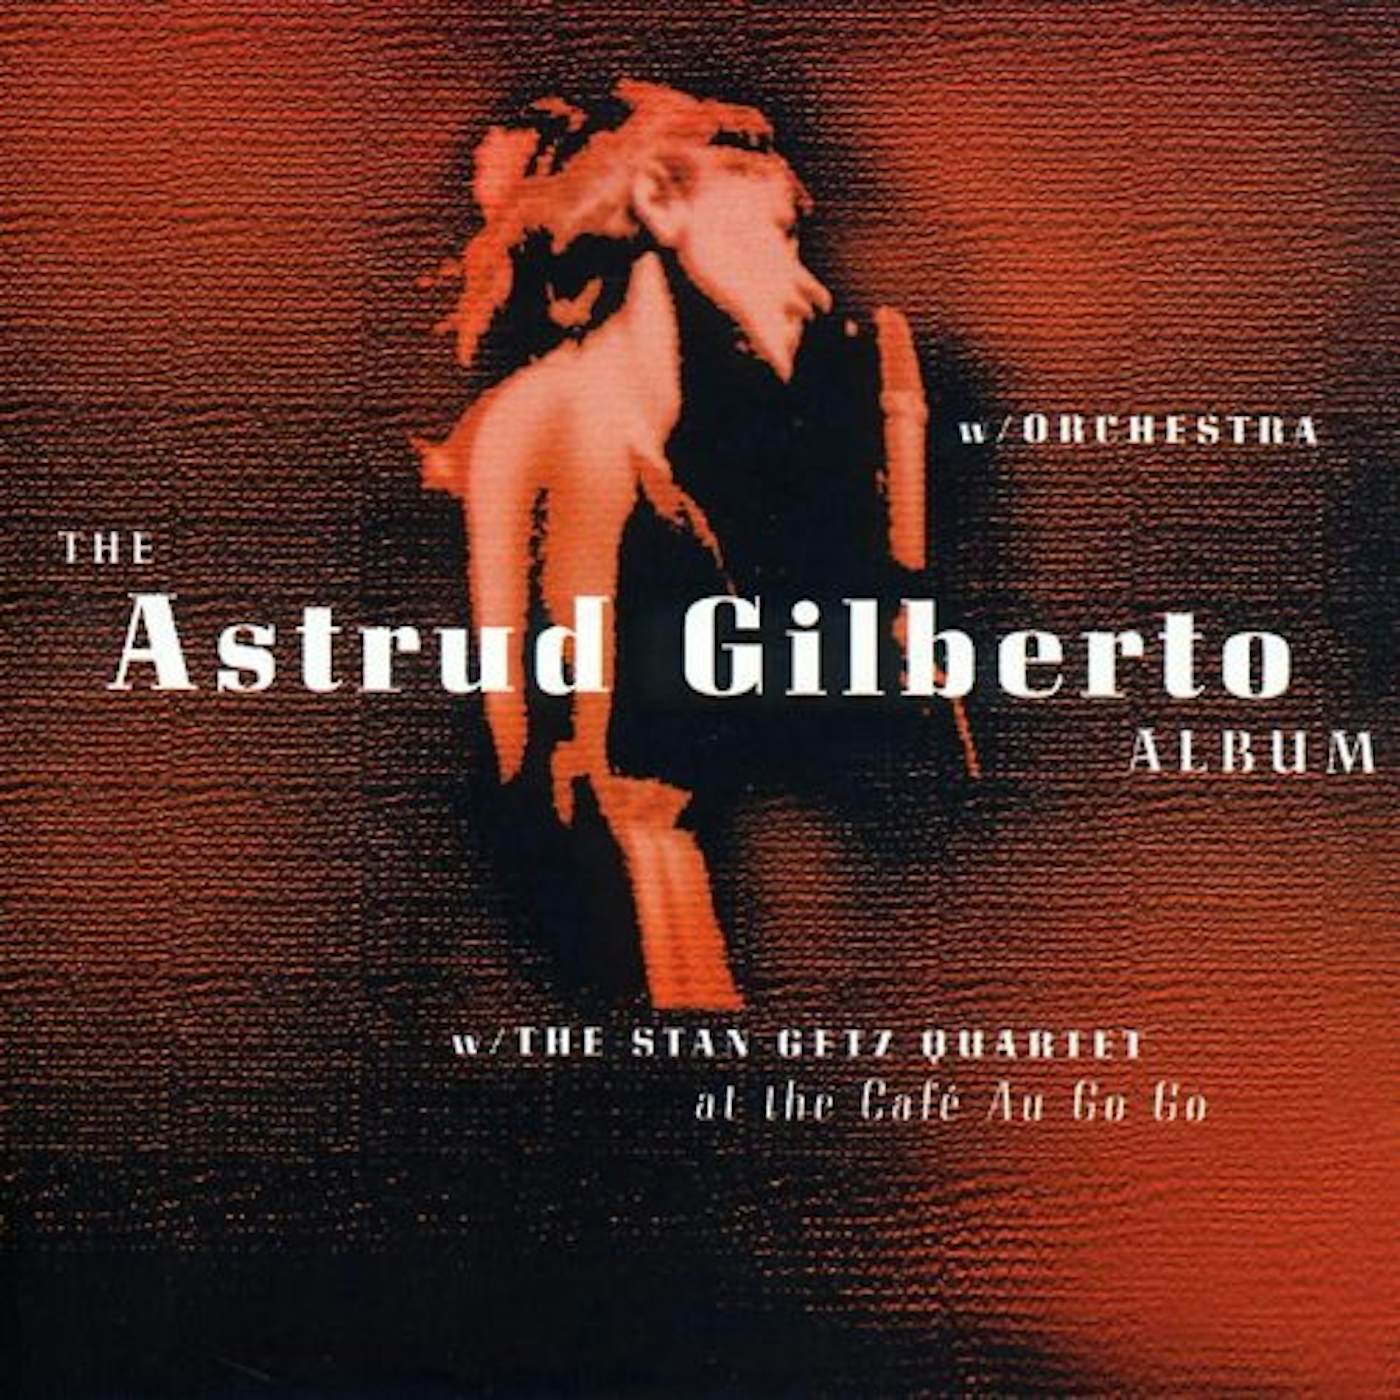 Astrud Gilberto AT THE CAFE AU GO GO CD